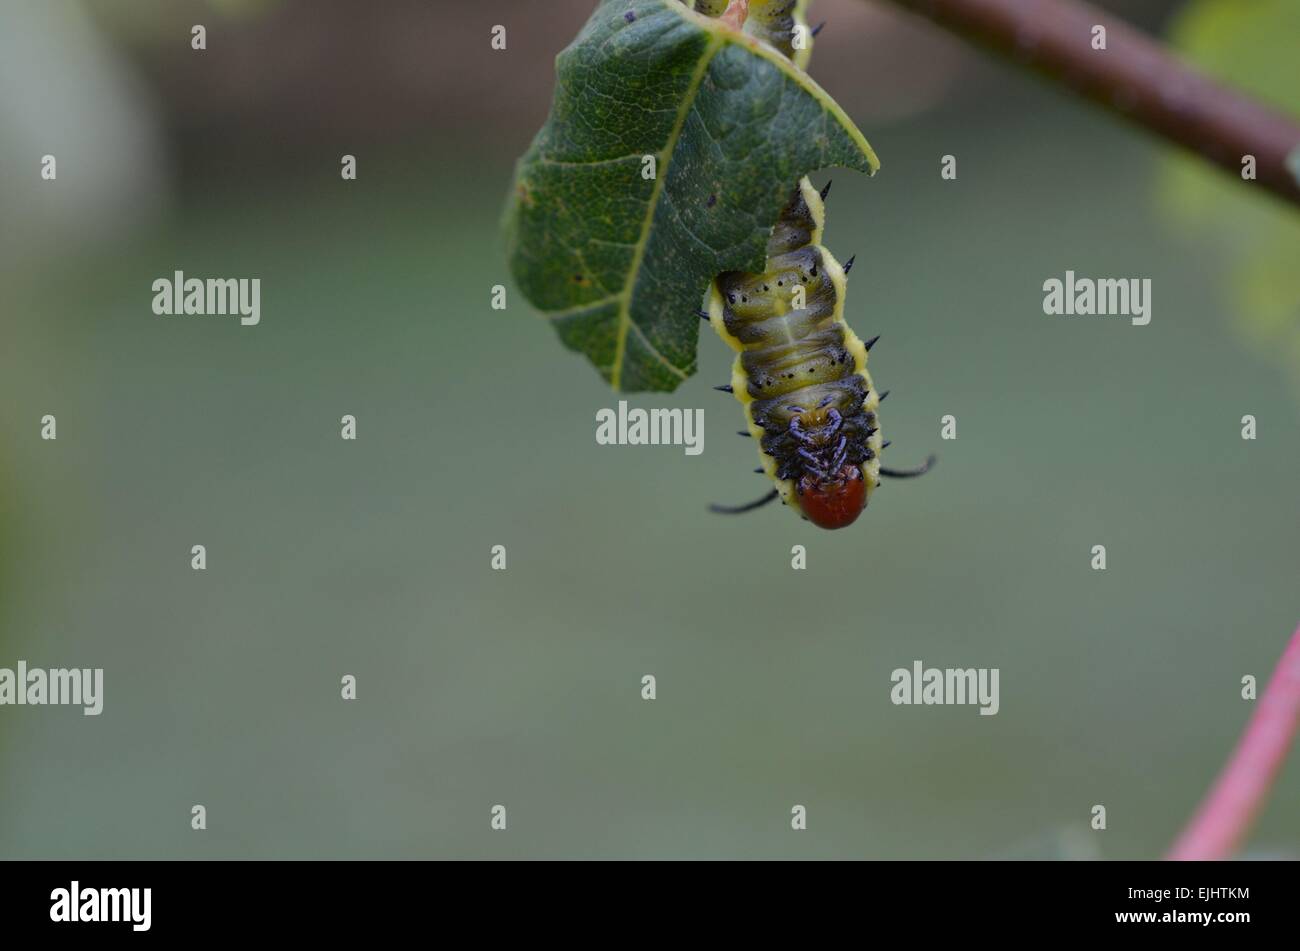 Caterpillar on leaf Stock Photo